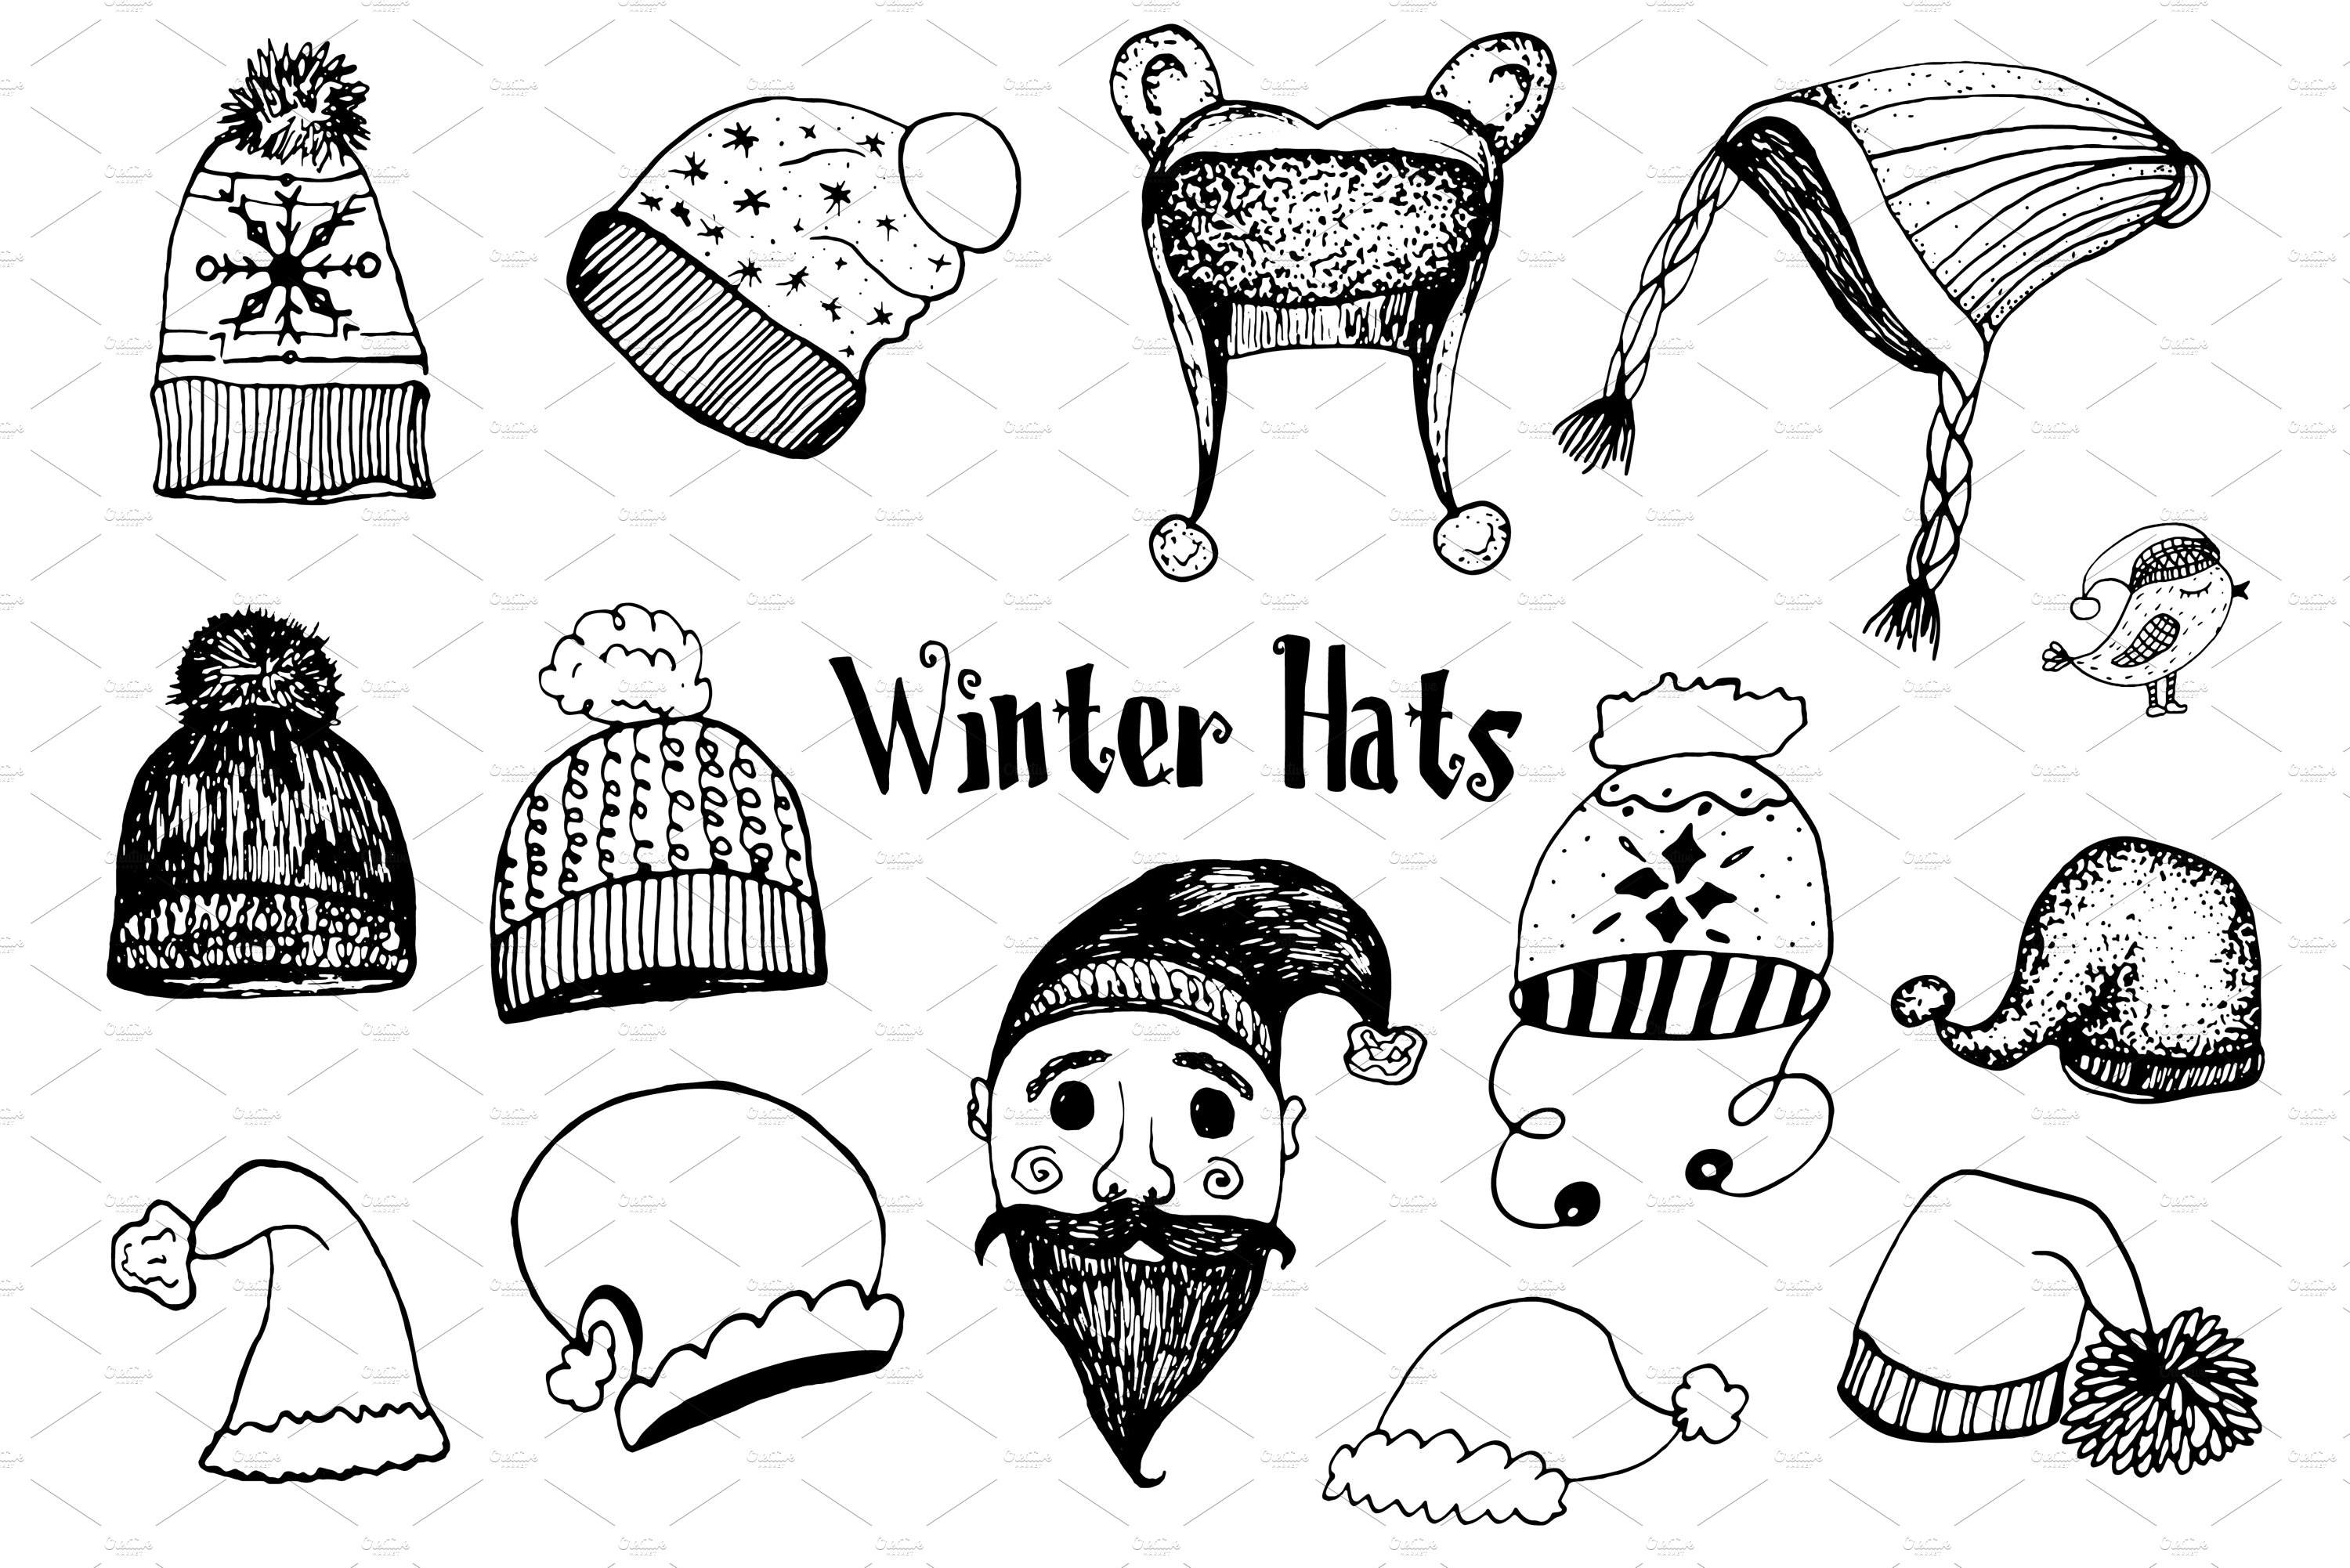 Winter hats set.